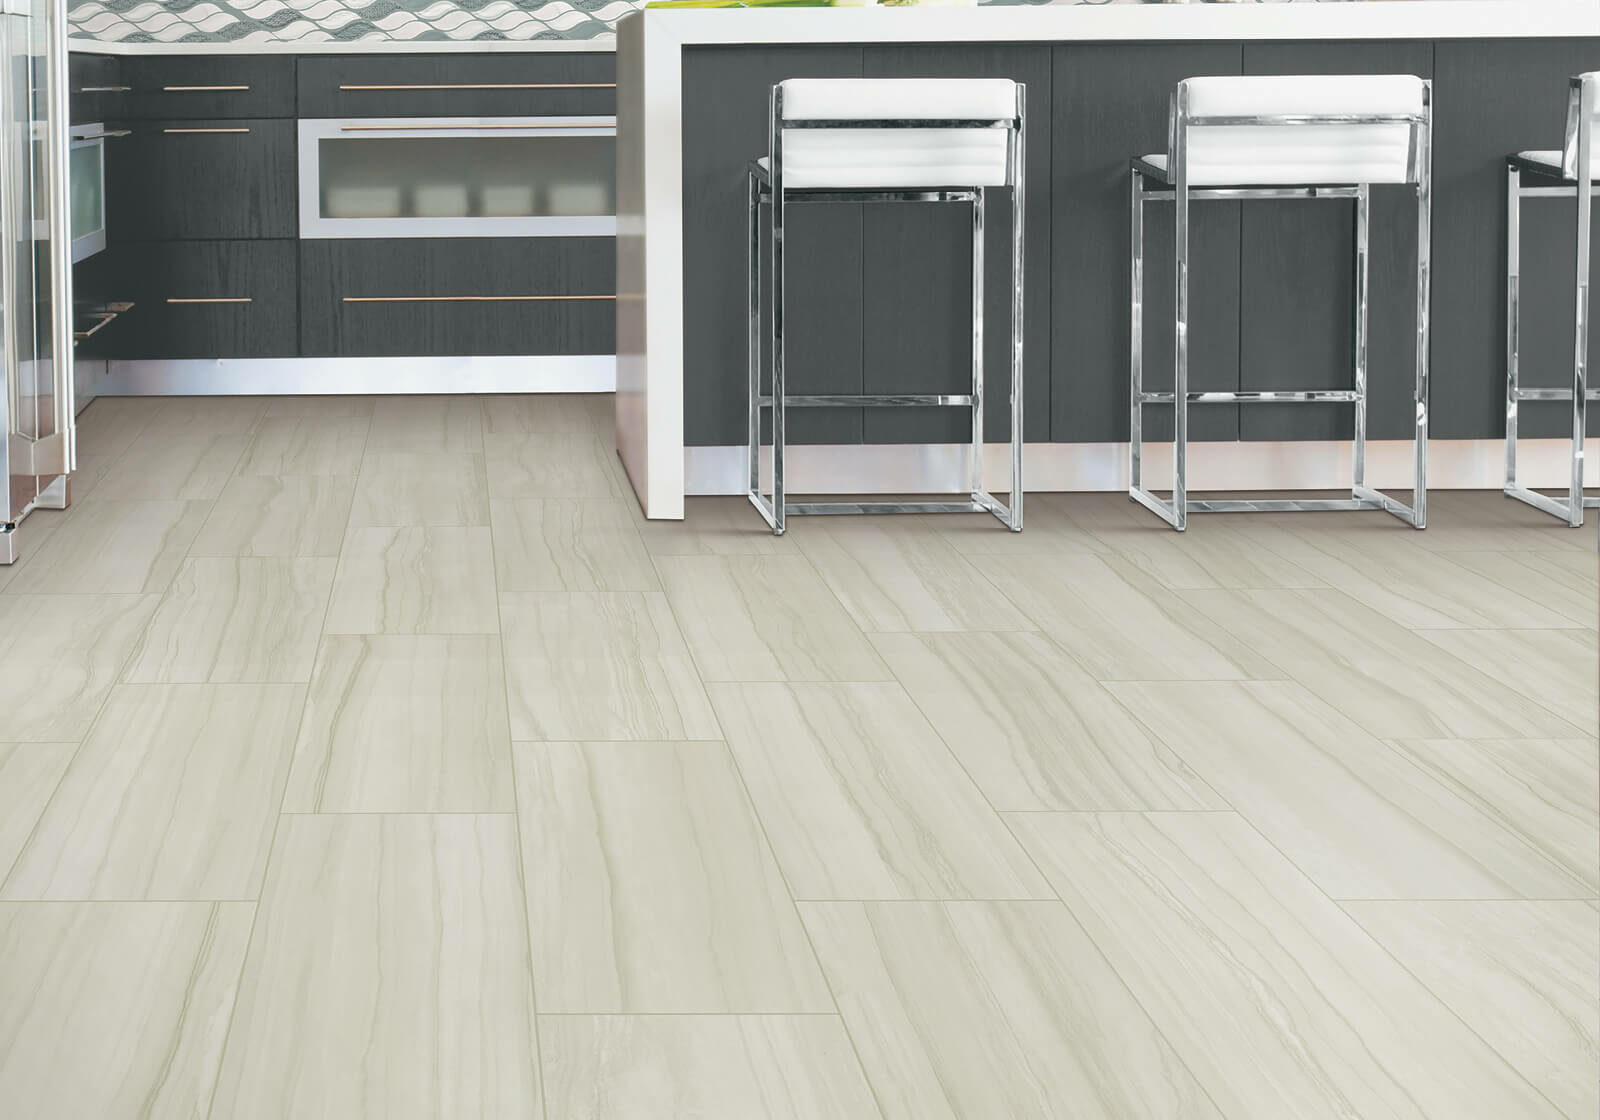 Tile in kitchen | America's Flooring Store